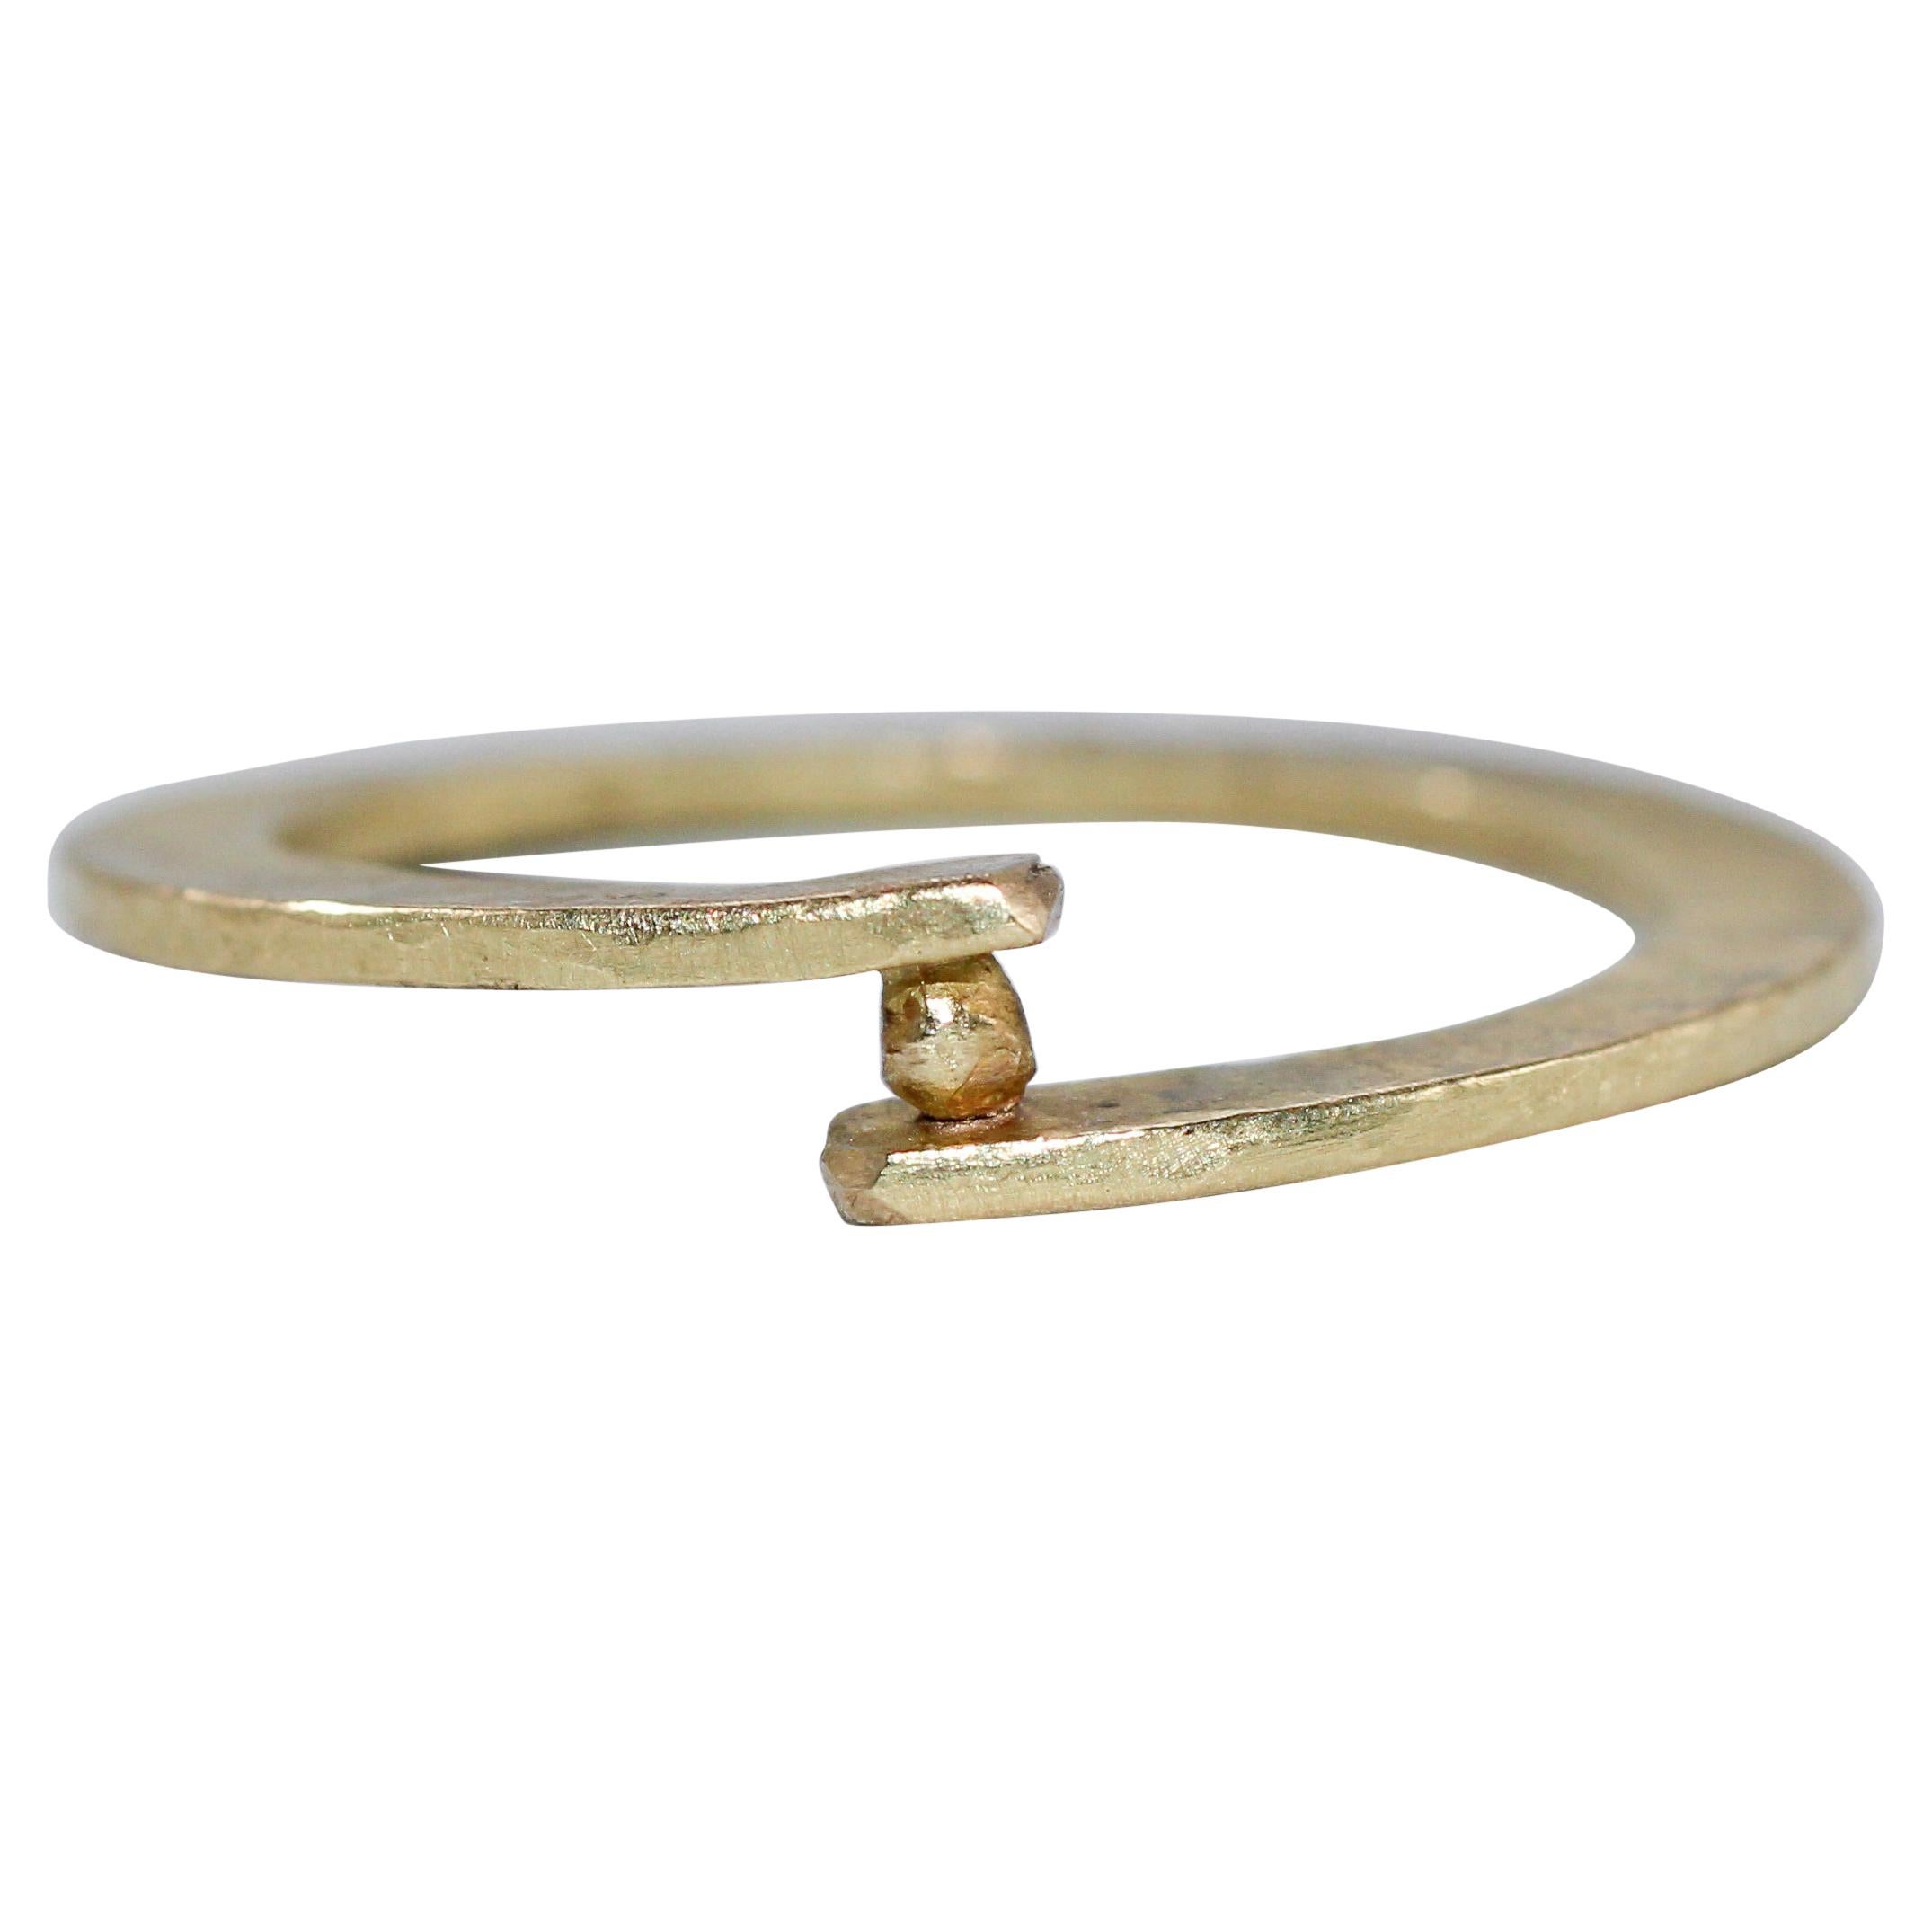 Moderner Granule-Ring aus 18 Karat Gold mit weiteren Mode-Stapeln